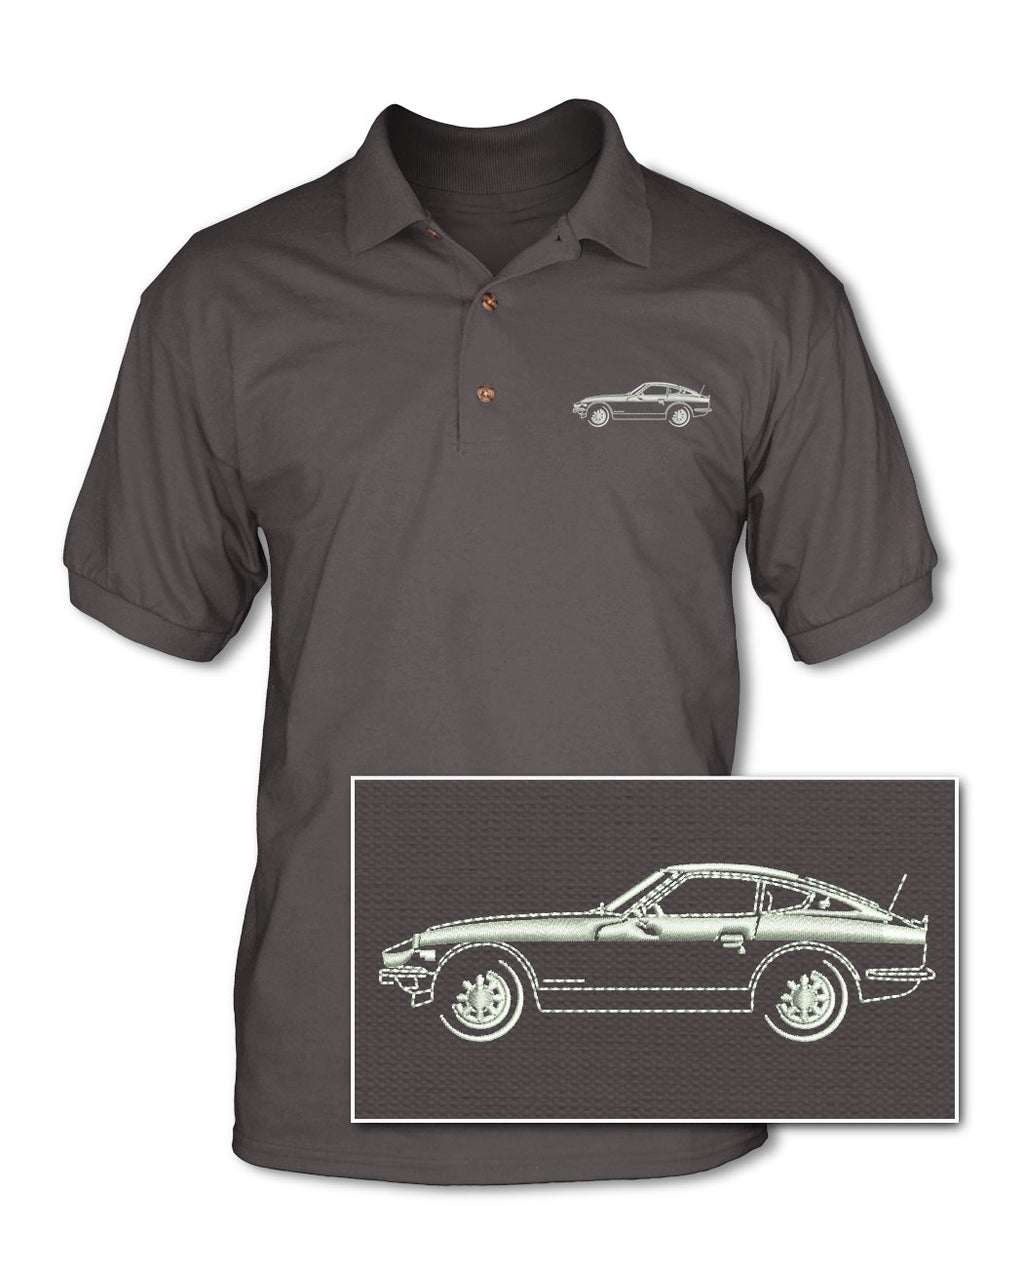 Datsun 240Z 260Z 280Z Coupe Adult Pique Polo Shirt - Side View